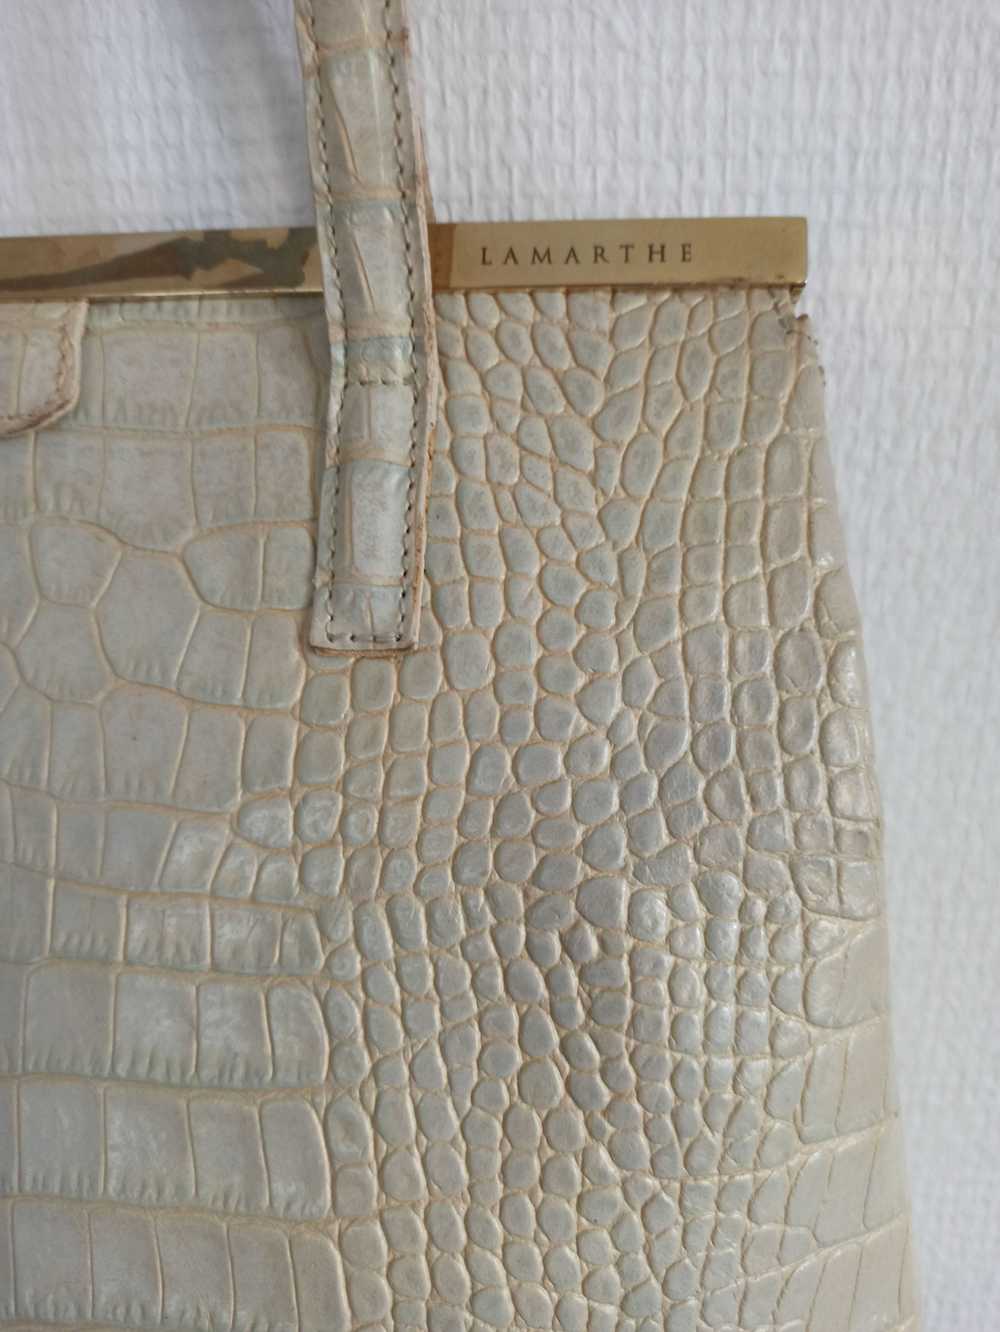 Leather handbag - Maison Lamarthe handbag - image 8